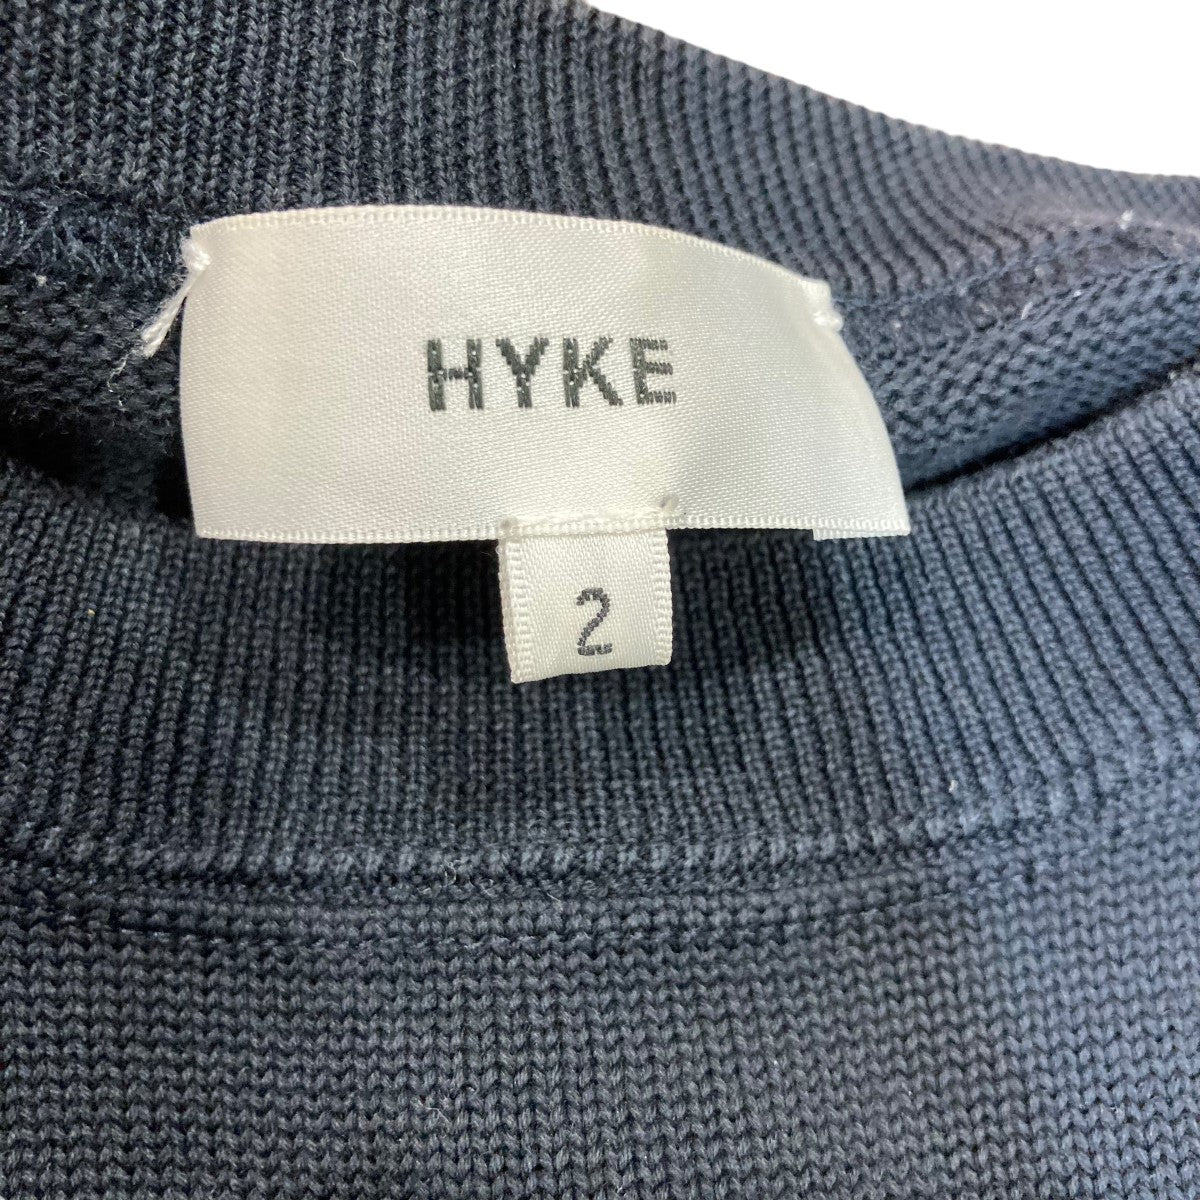 HYKE(ハイク) コットンフレンチスリーブニット161-11058 161-11058 